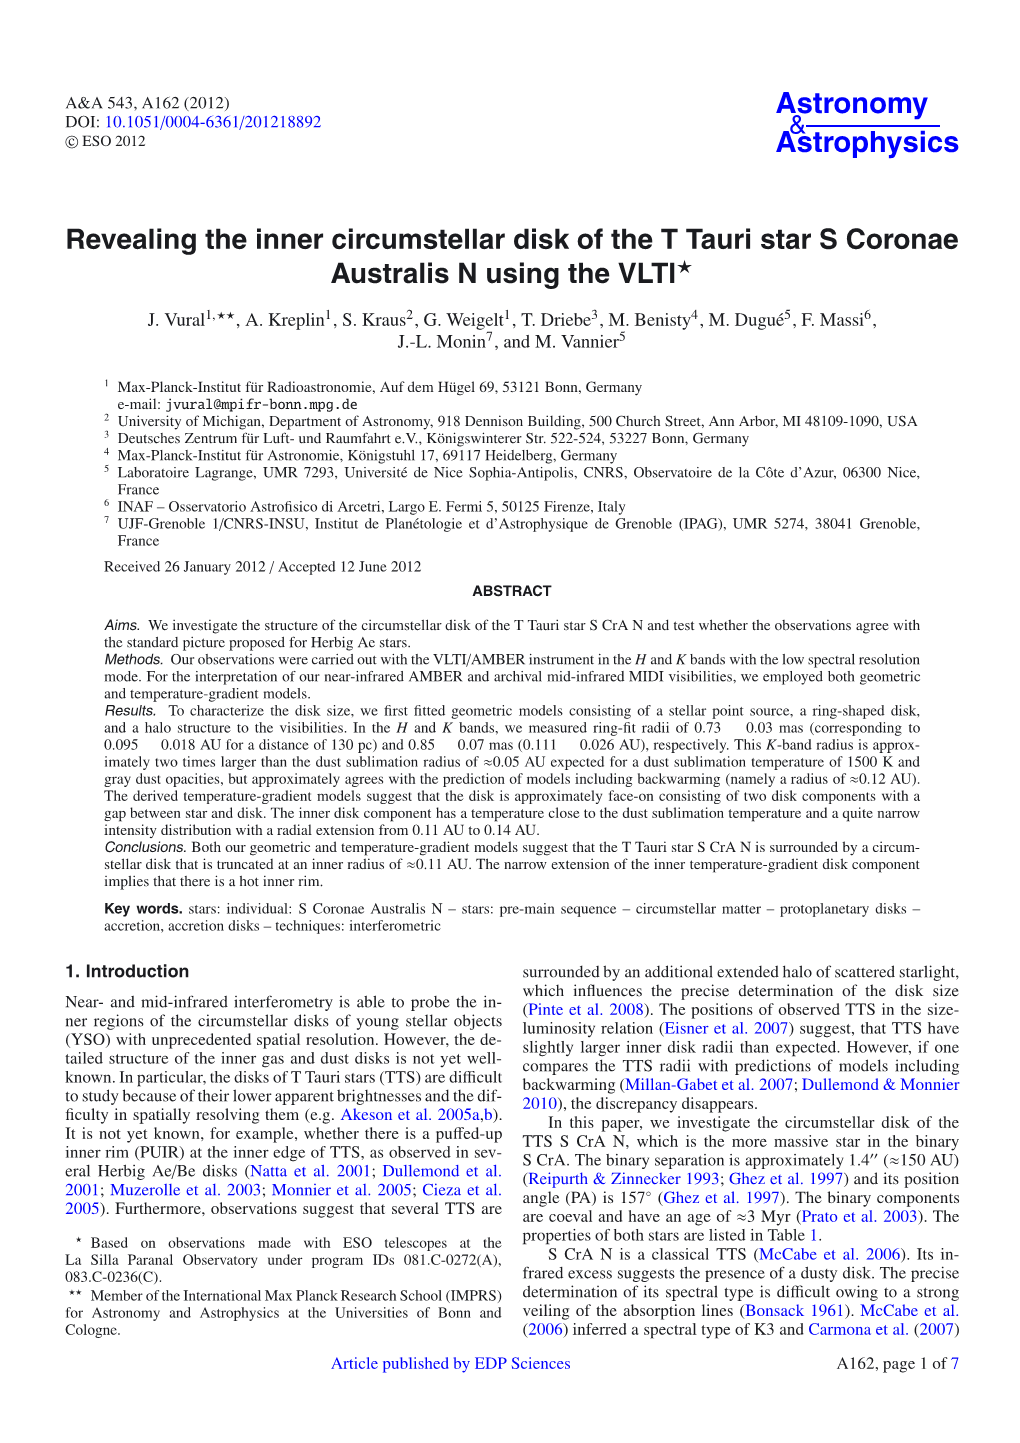 Revealing the Inner Circumstellar Disk of the T Tauri Star S Coronae Australis N Using the VLTI